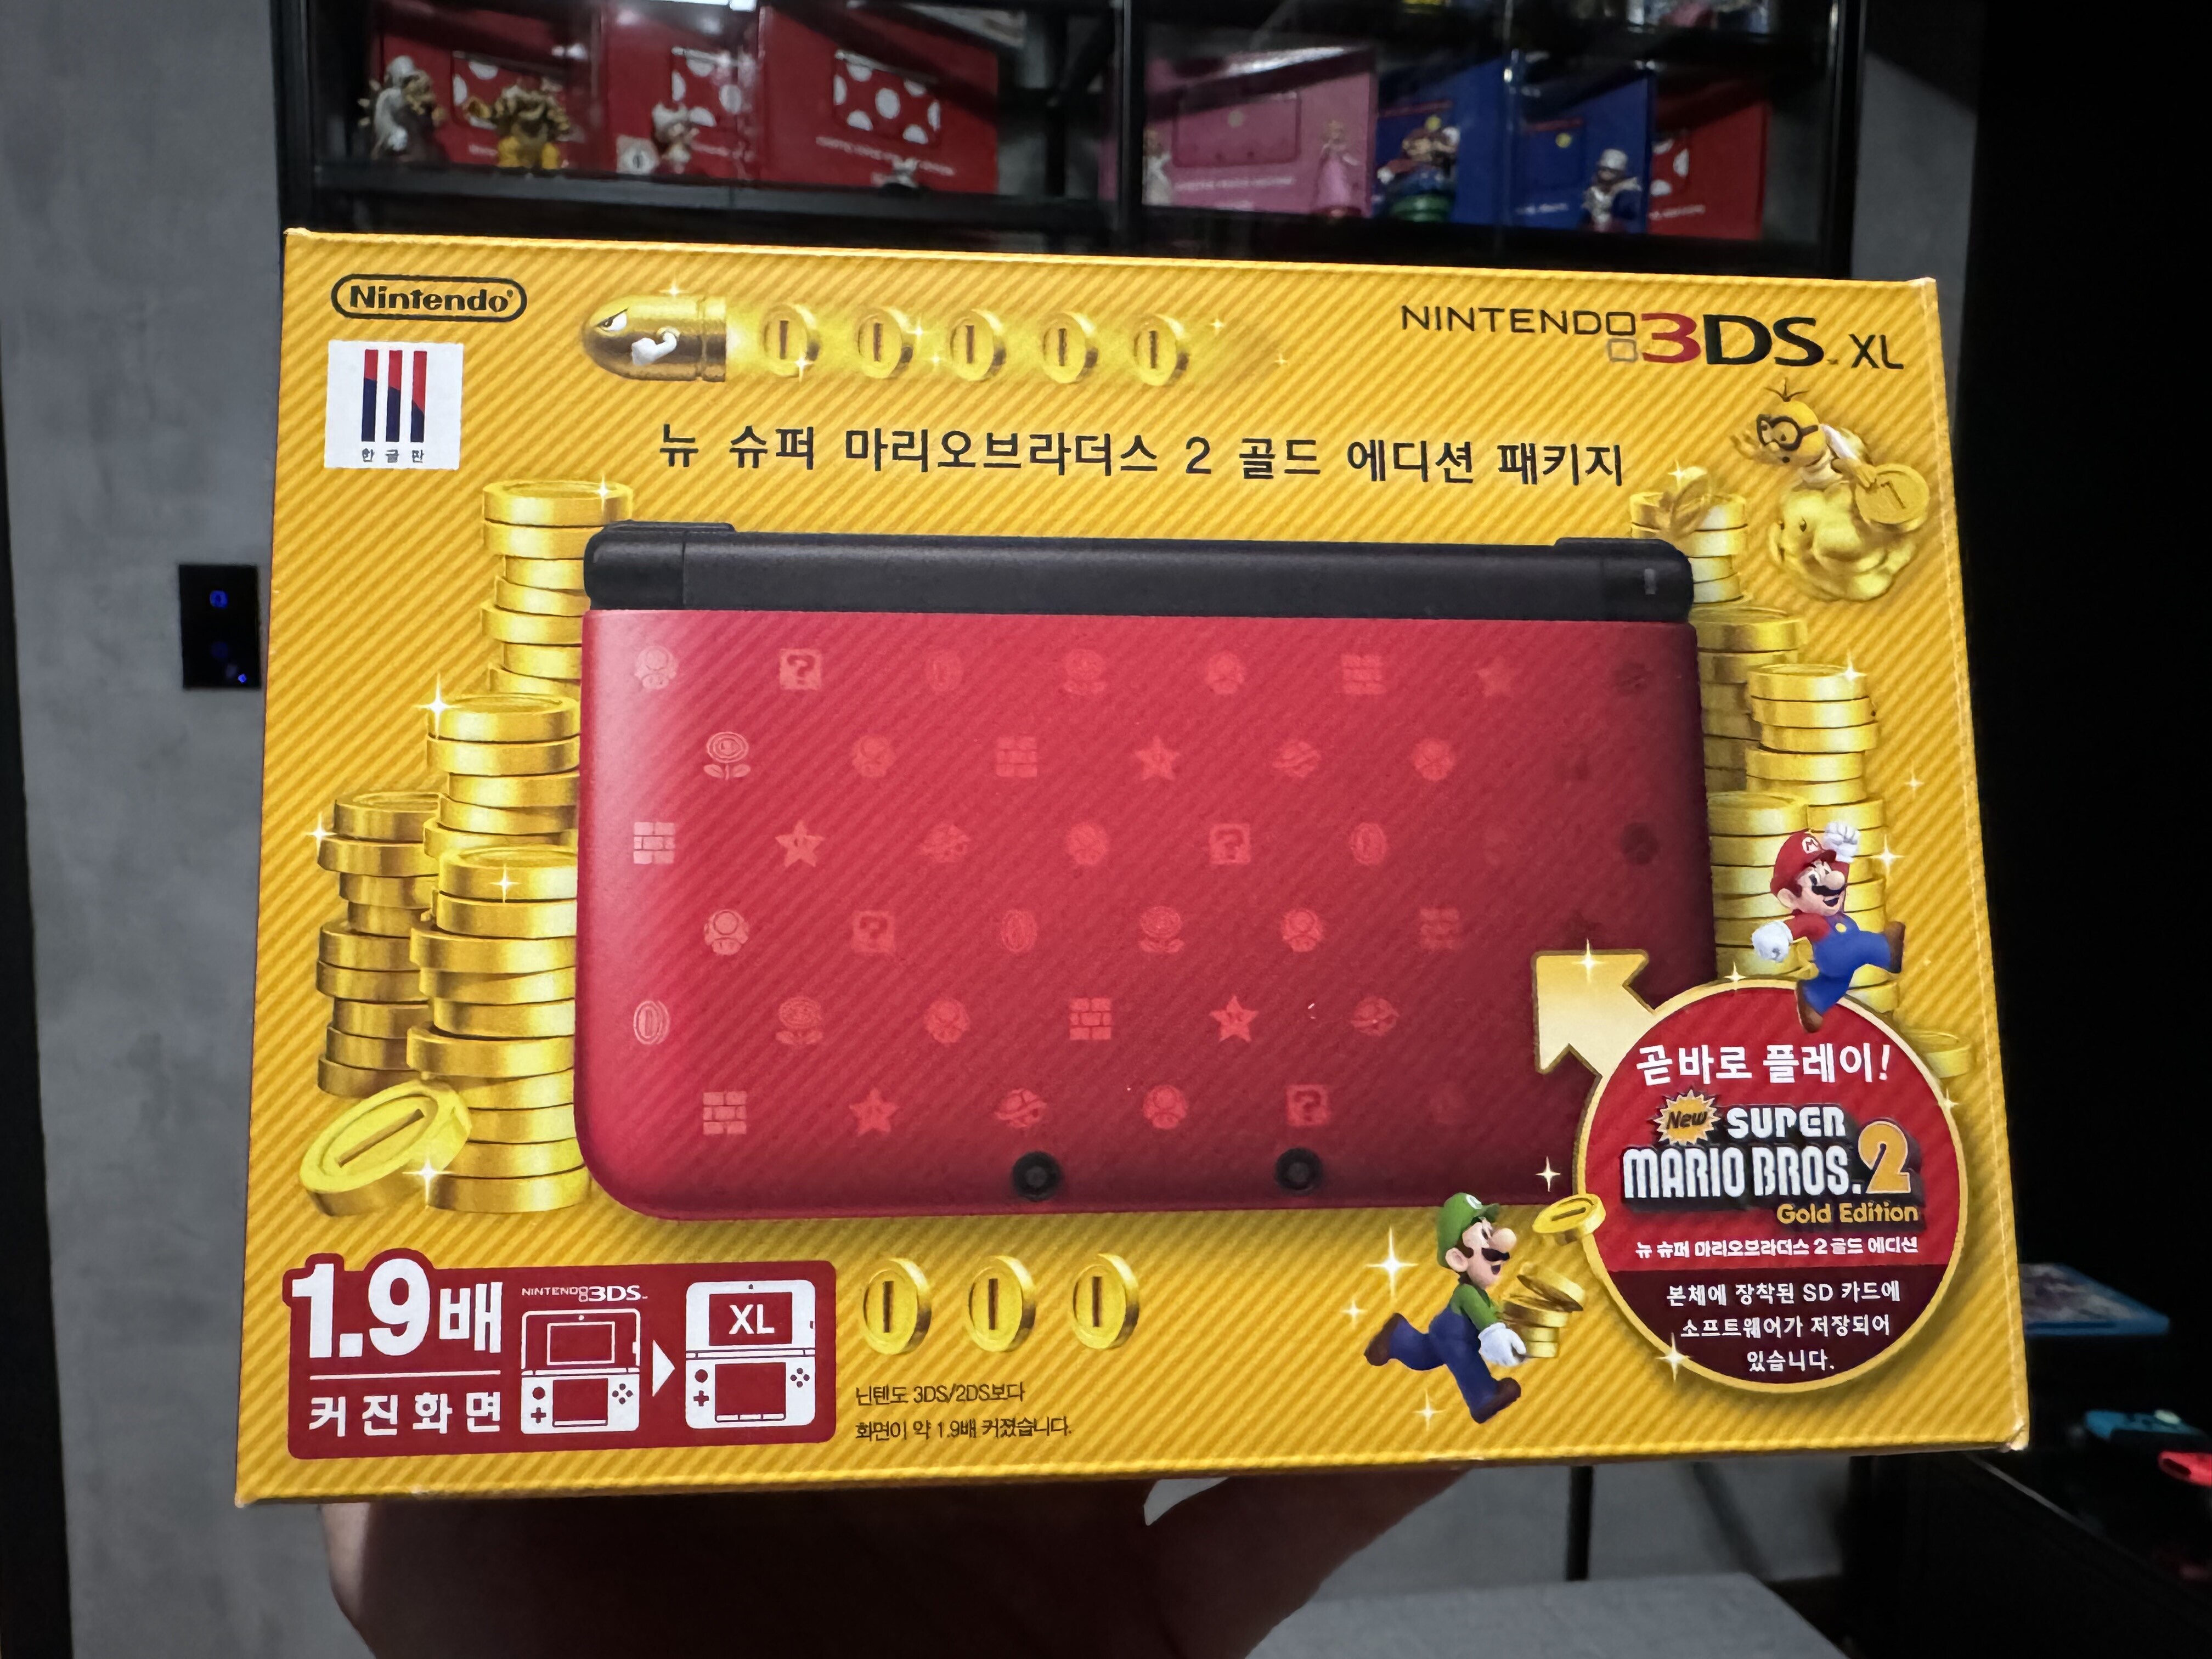  Nintendo 3DS Xl New Super Mario Bros 2 Gold Edition [KOR]